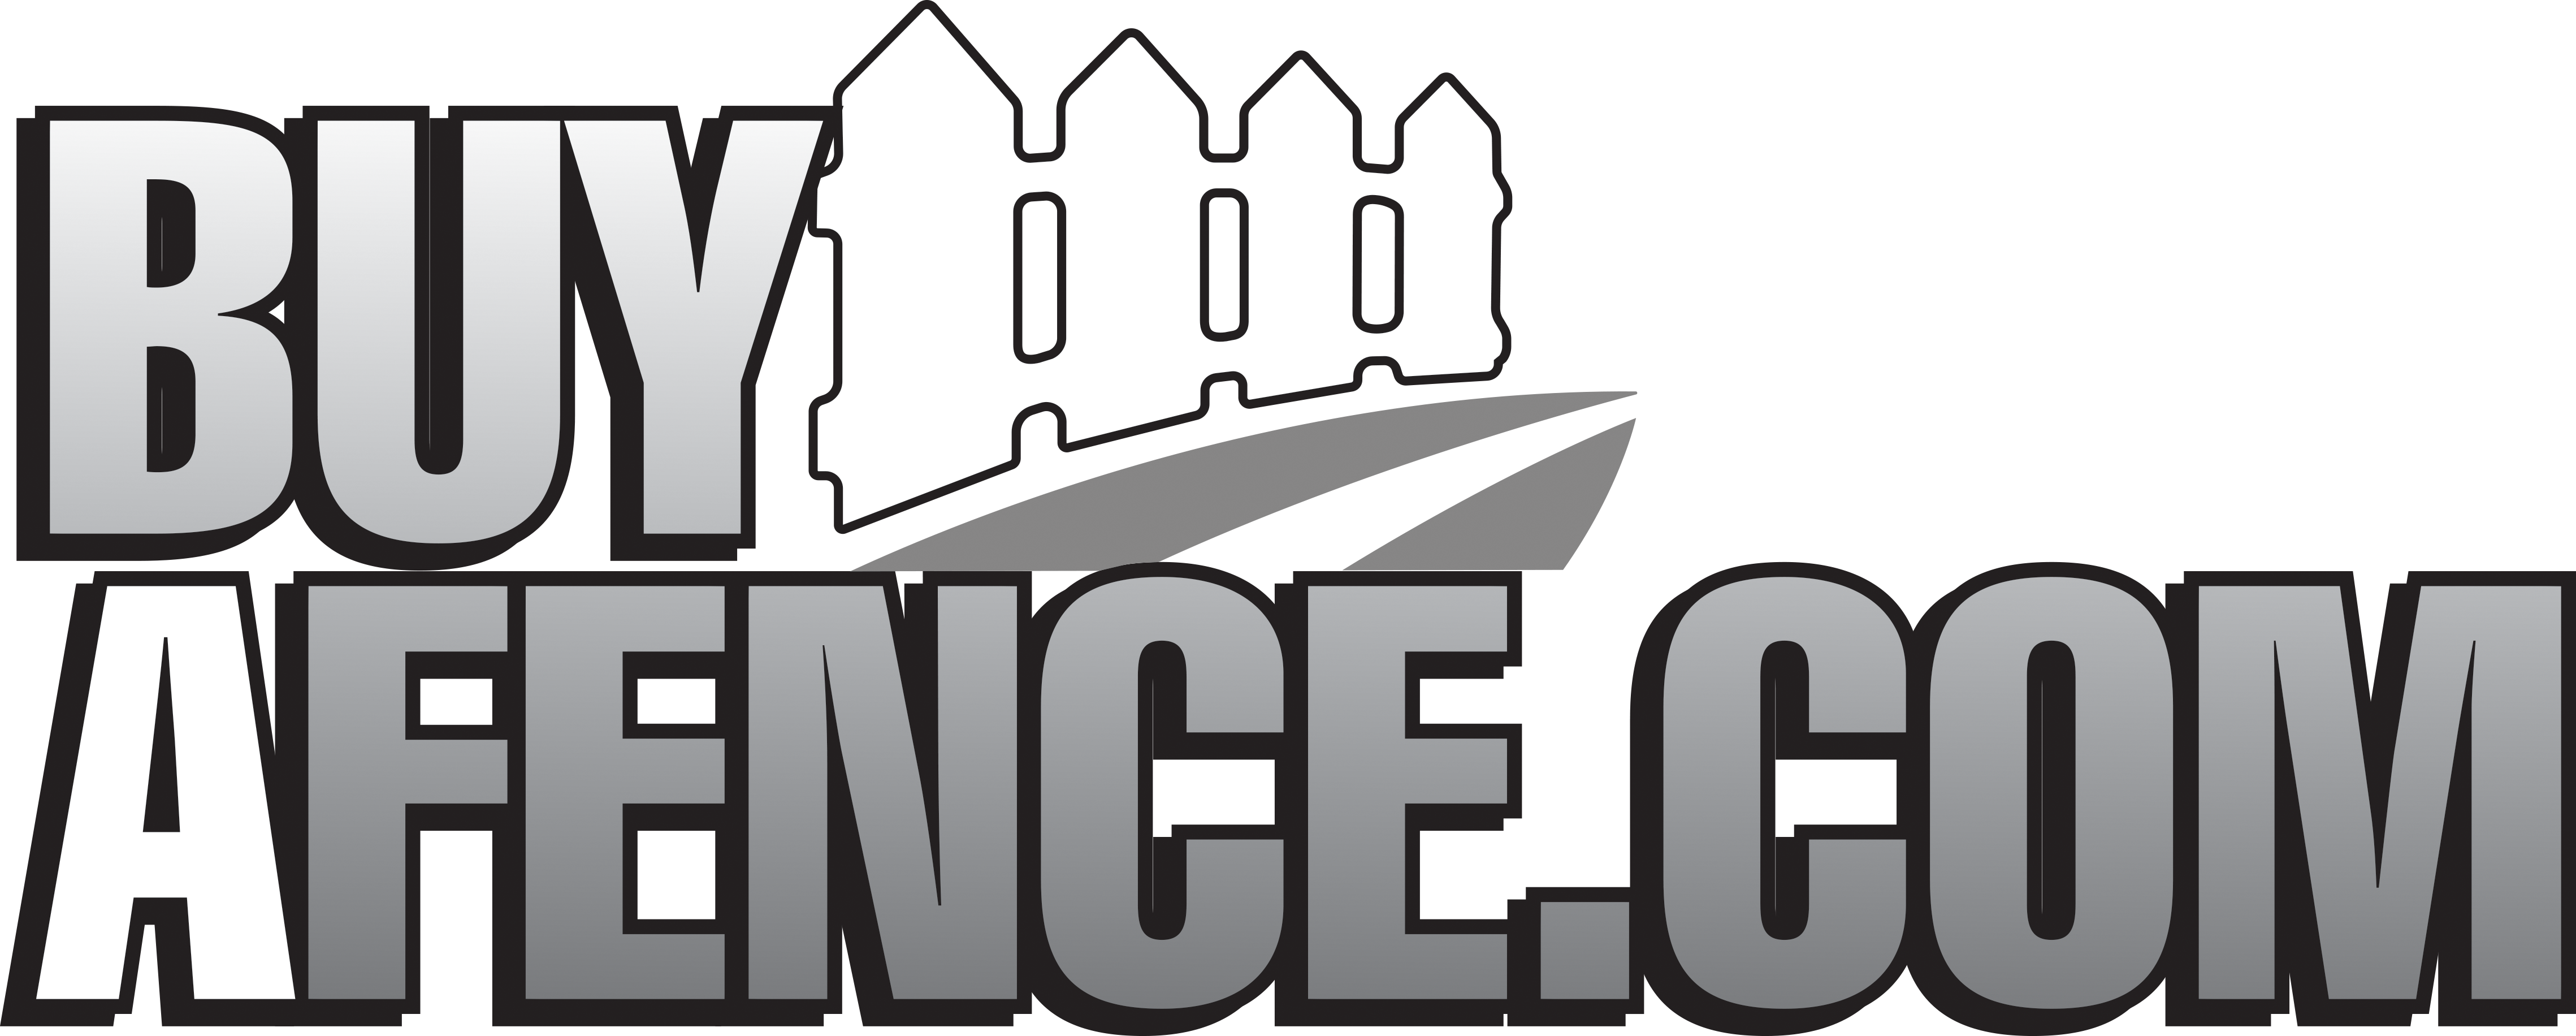 BUYAFENCECOM_Logo.png